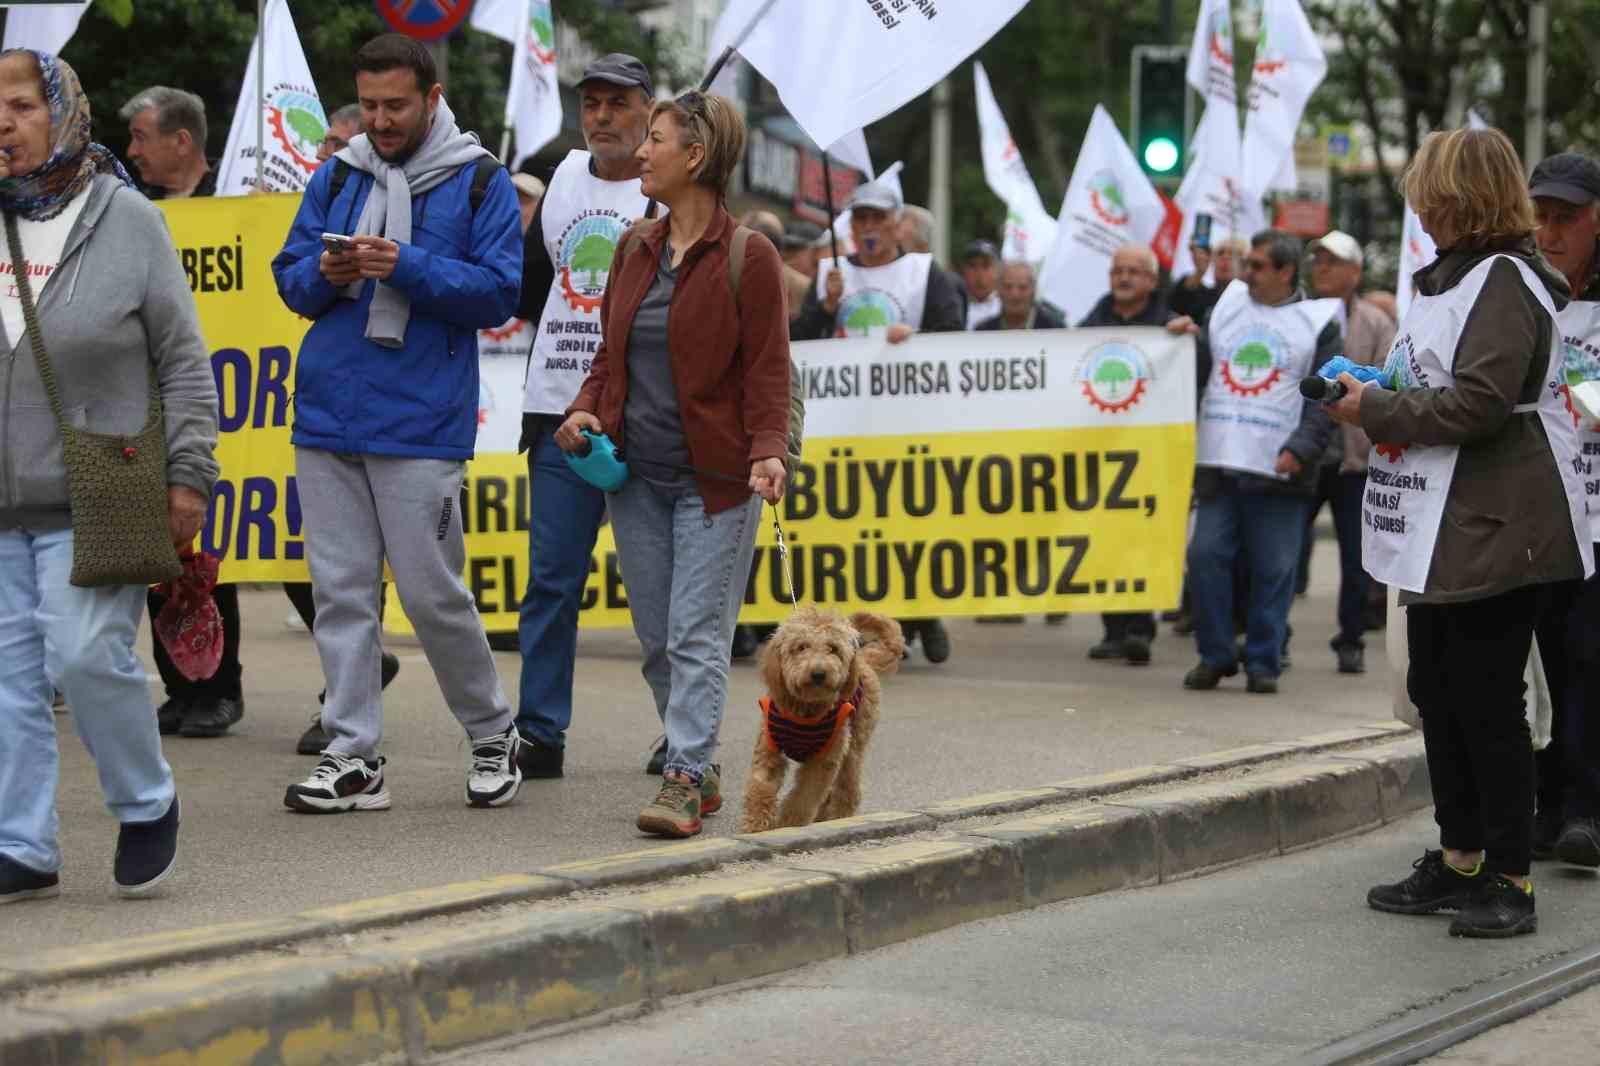 Bursa’da 1 Mayıs coşkusu yaşandı
